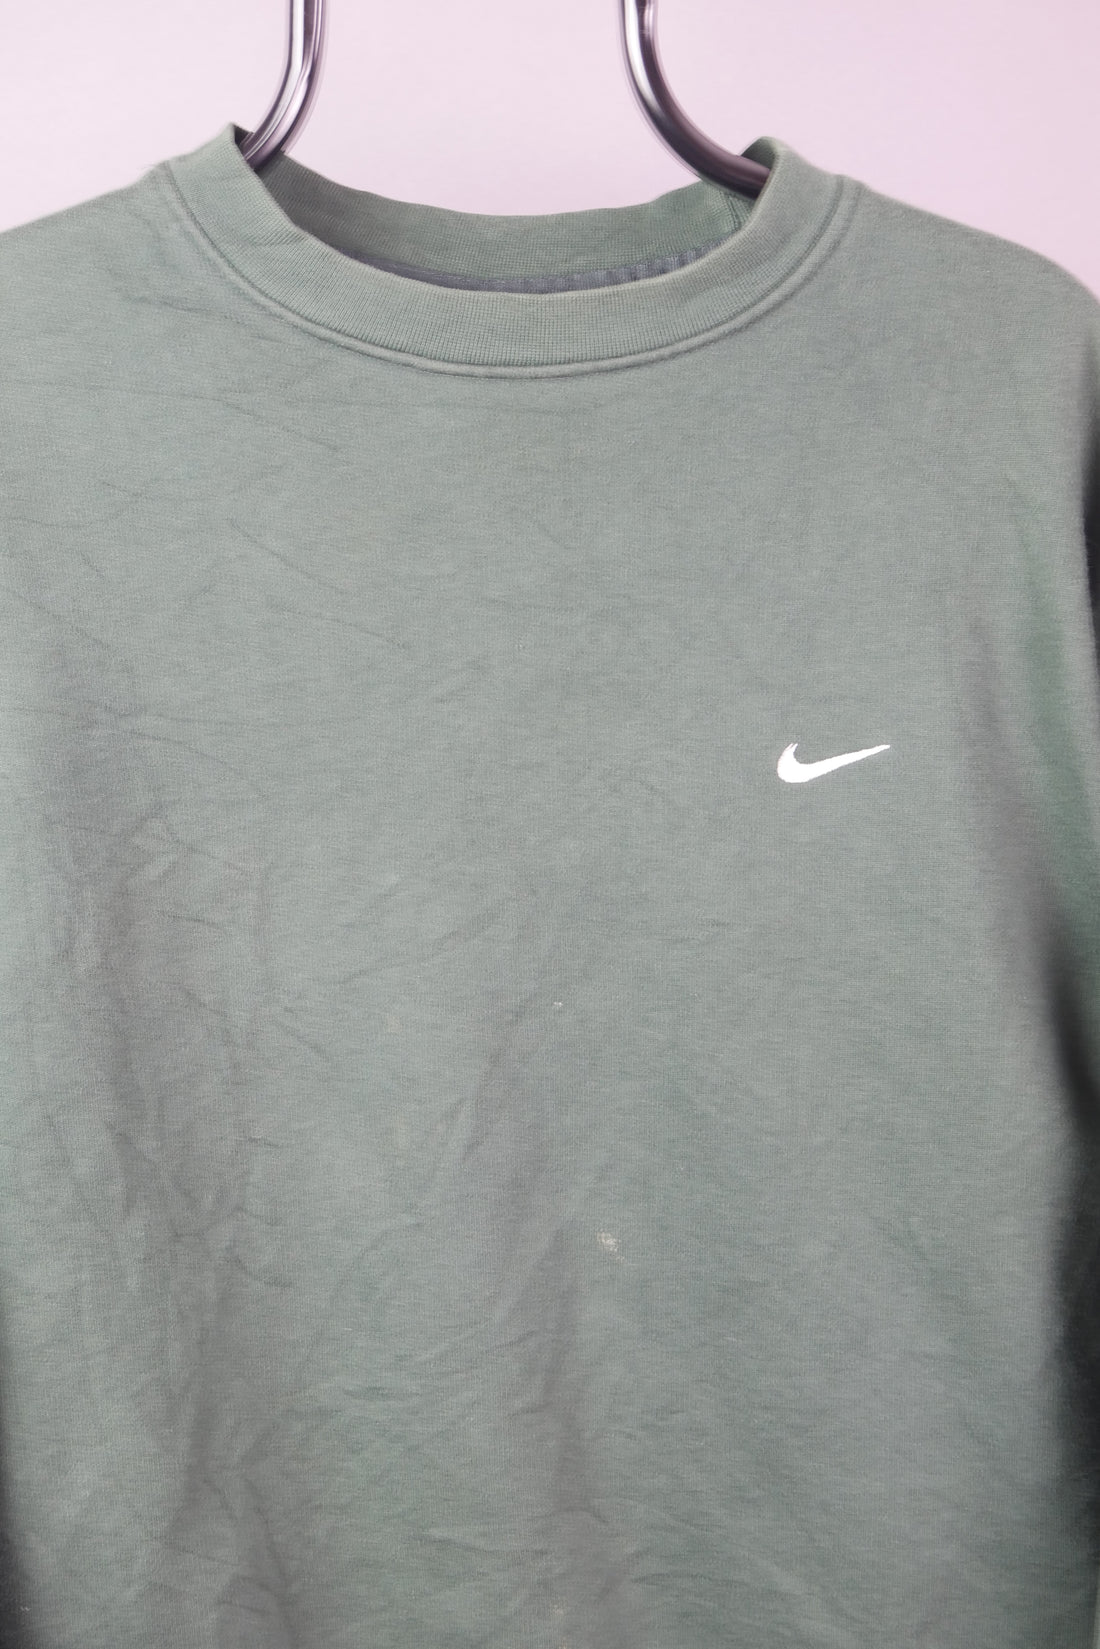 The Nike Crewneck Sweatshirt (M)